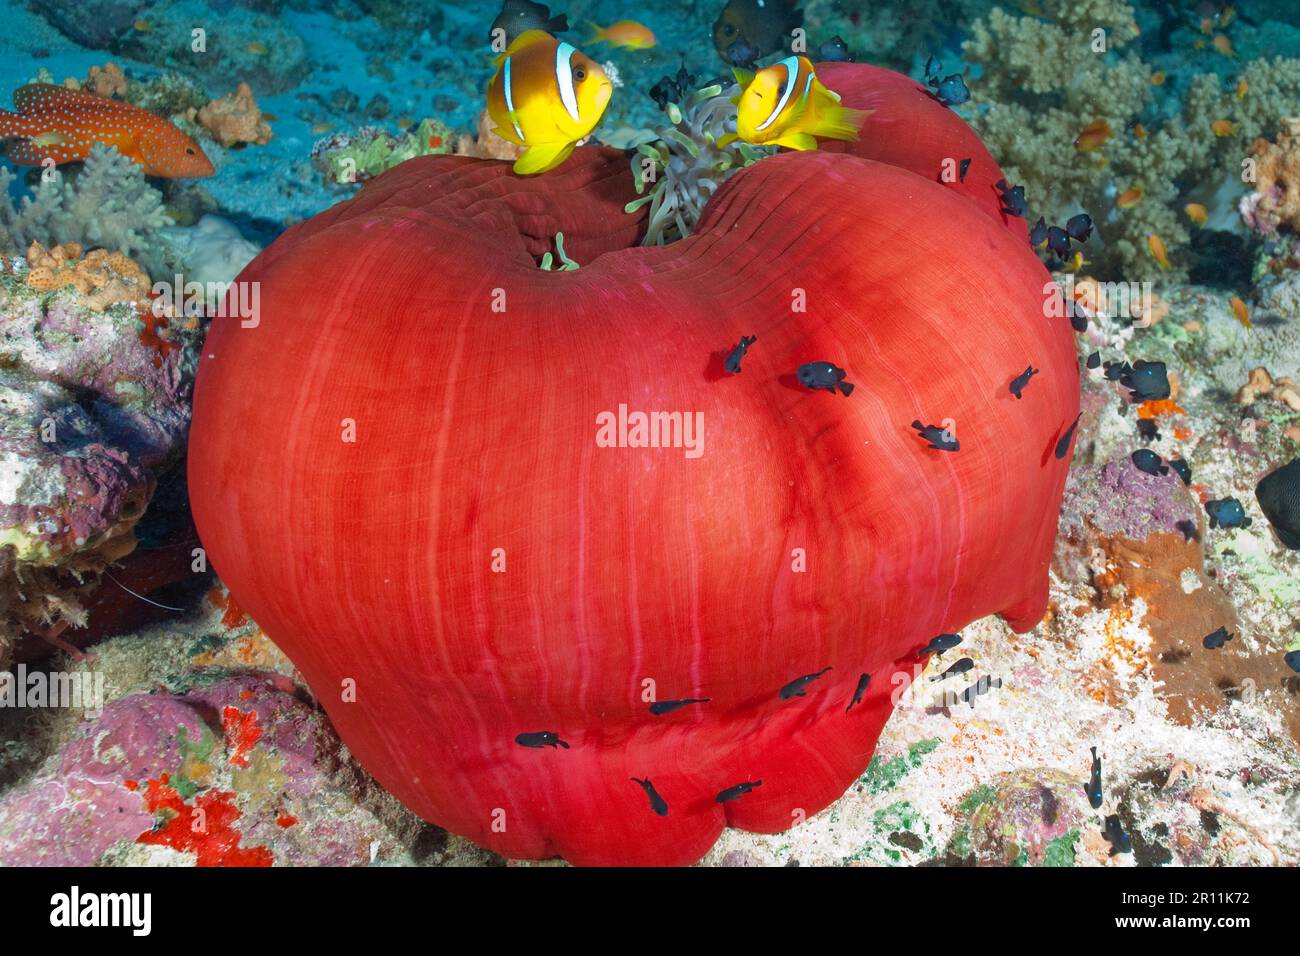 Magnifico anemone di mare (Heteractis magnifica), anemonefish mauriziano (Amphiprion chrysogaster), Oceano Indiano, Indo-Pacifico, anemone Mauritius e. Foto Stock